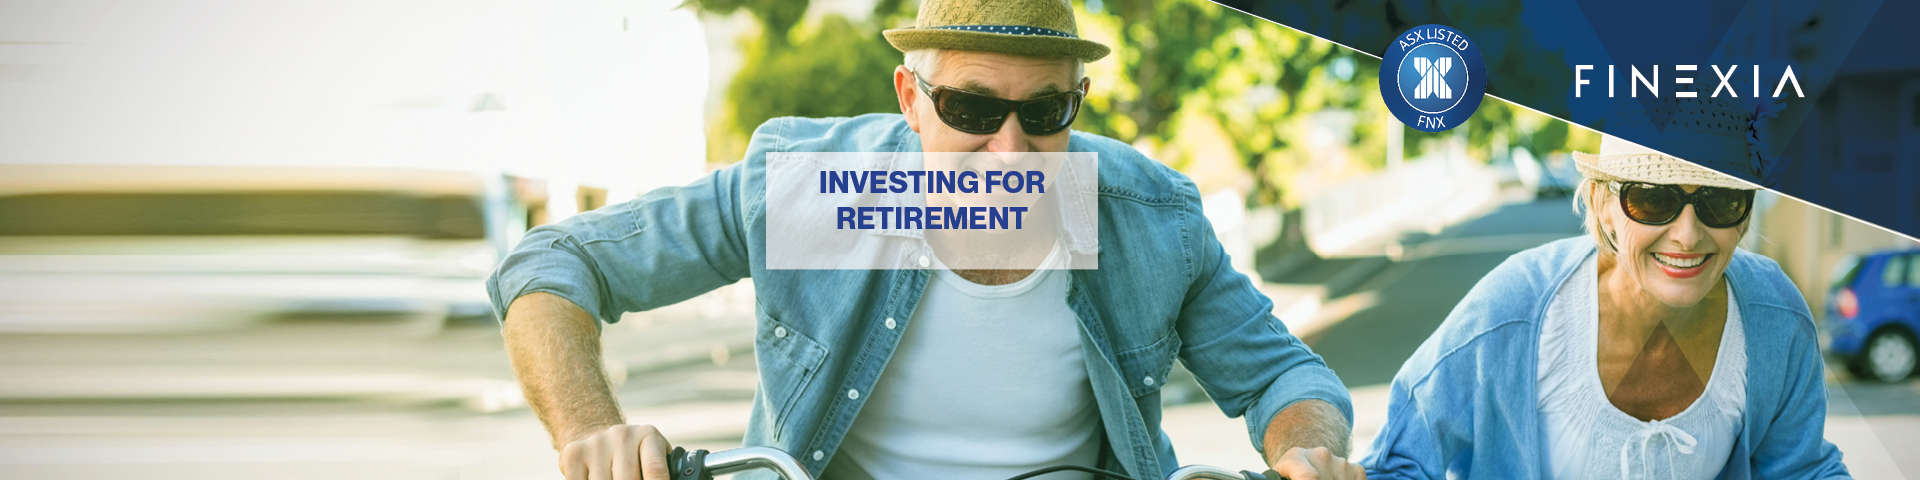 Investing for Retirement in Australia